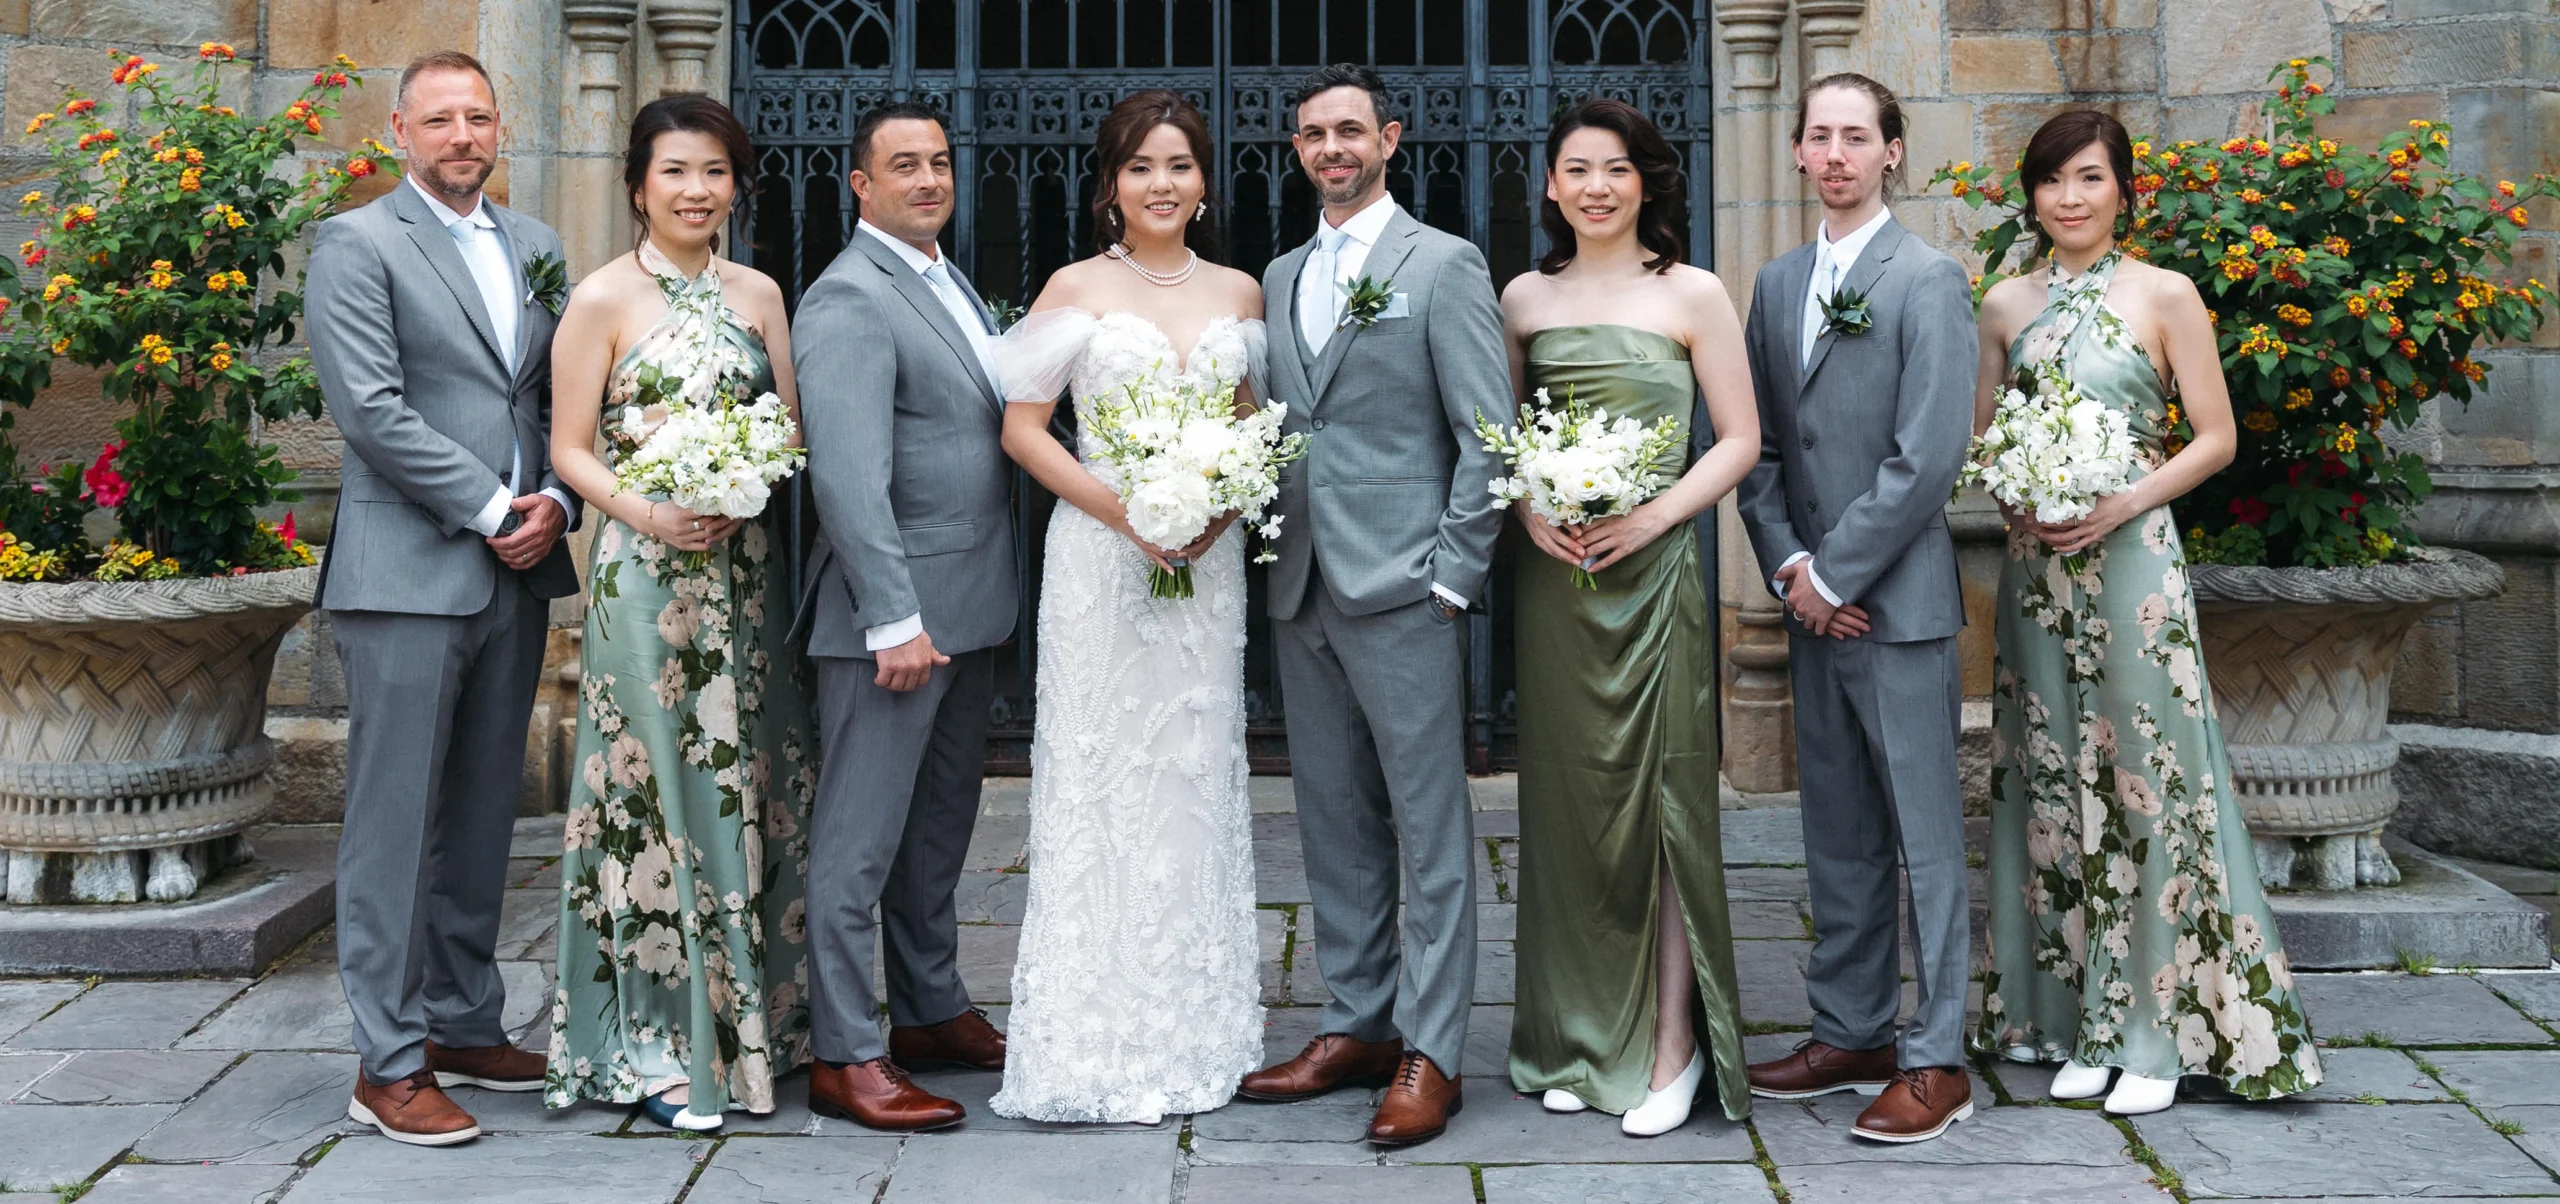 group photo of bridesmaid, bride, groom, and groomsmen